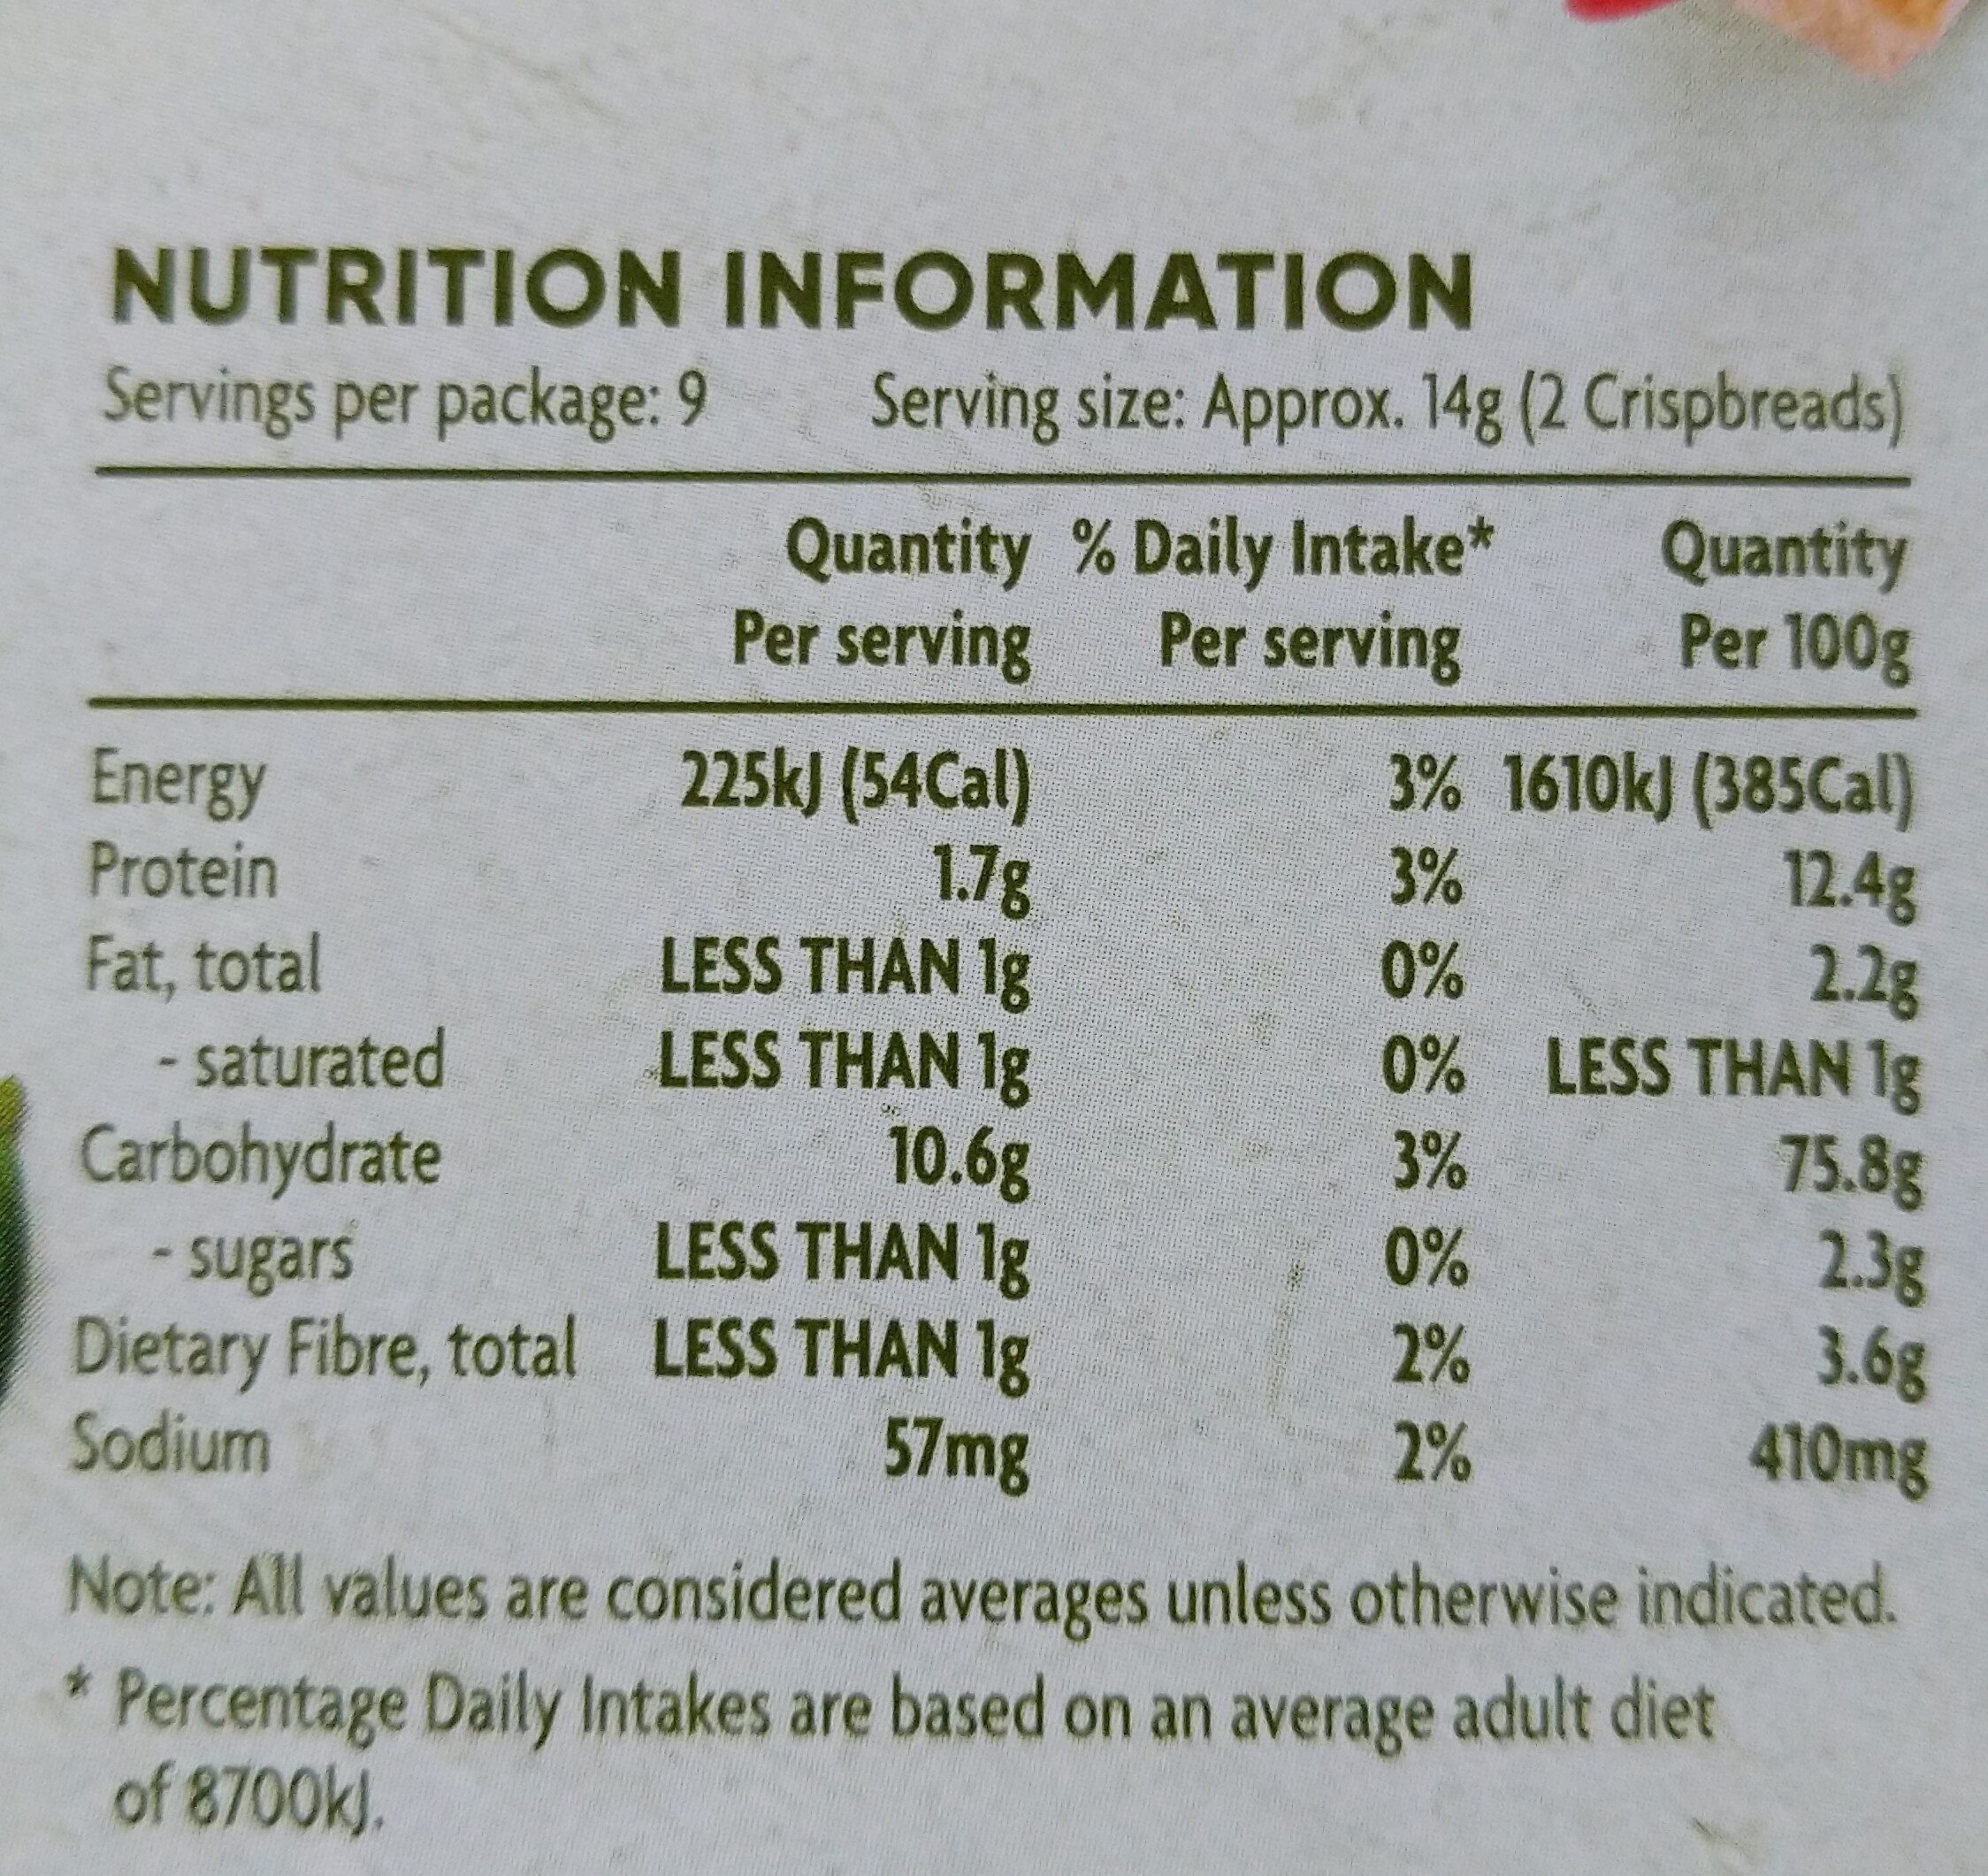 Crispbread - original - Nutrition facts